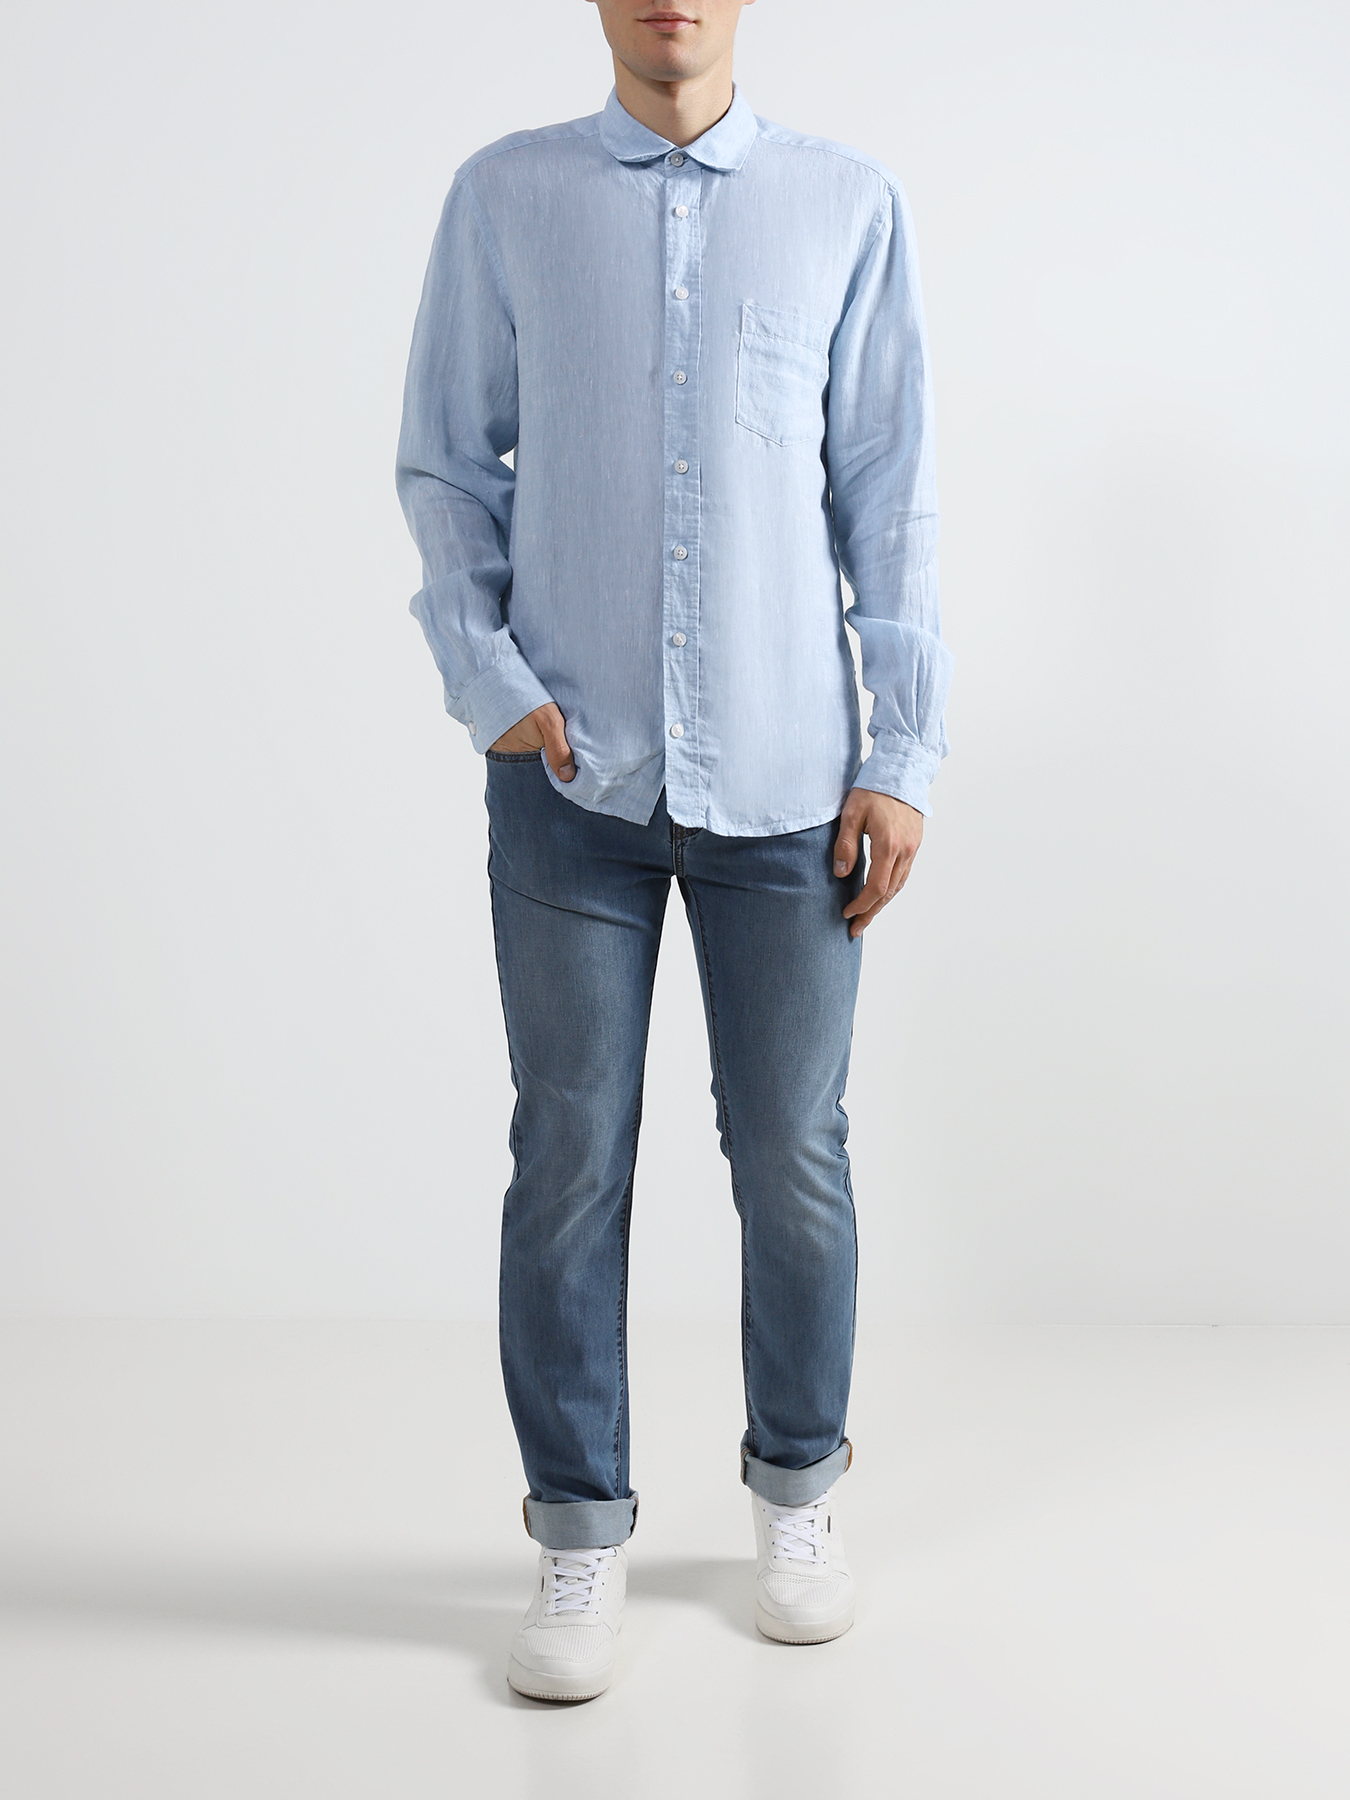 Alessandro Manzoni Jeans Мужская рубашка 328104-028